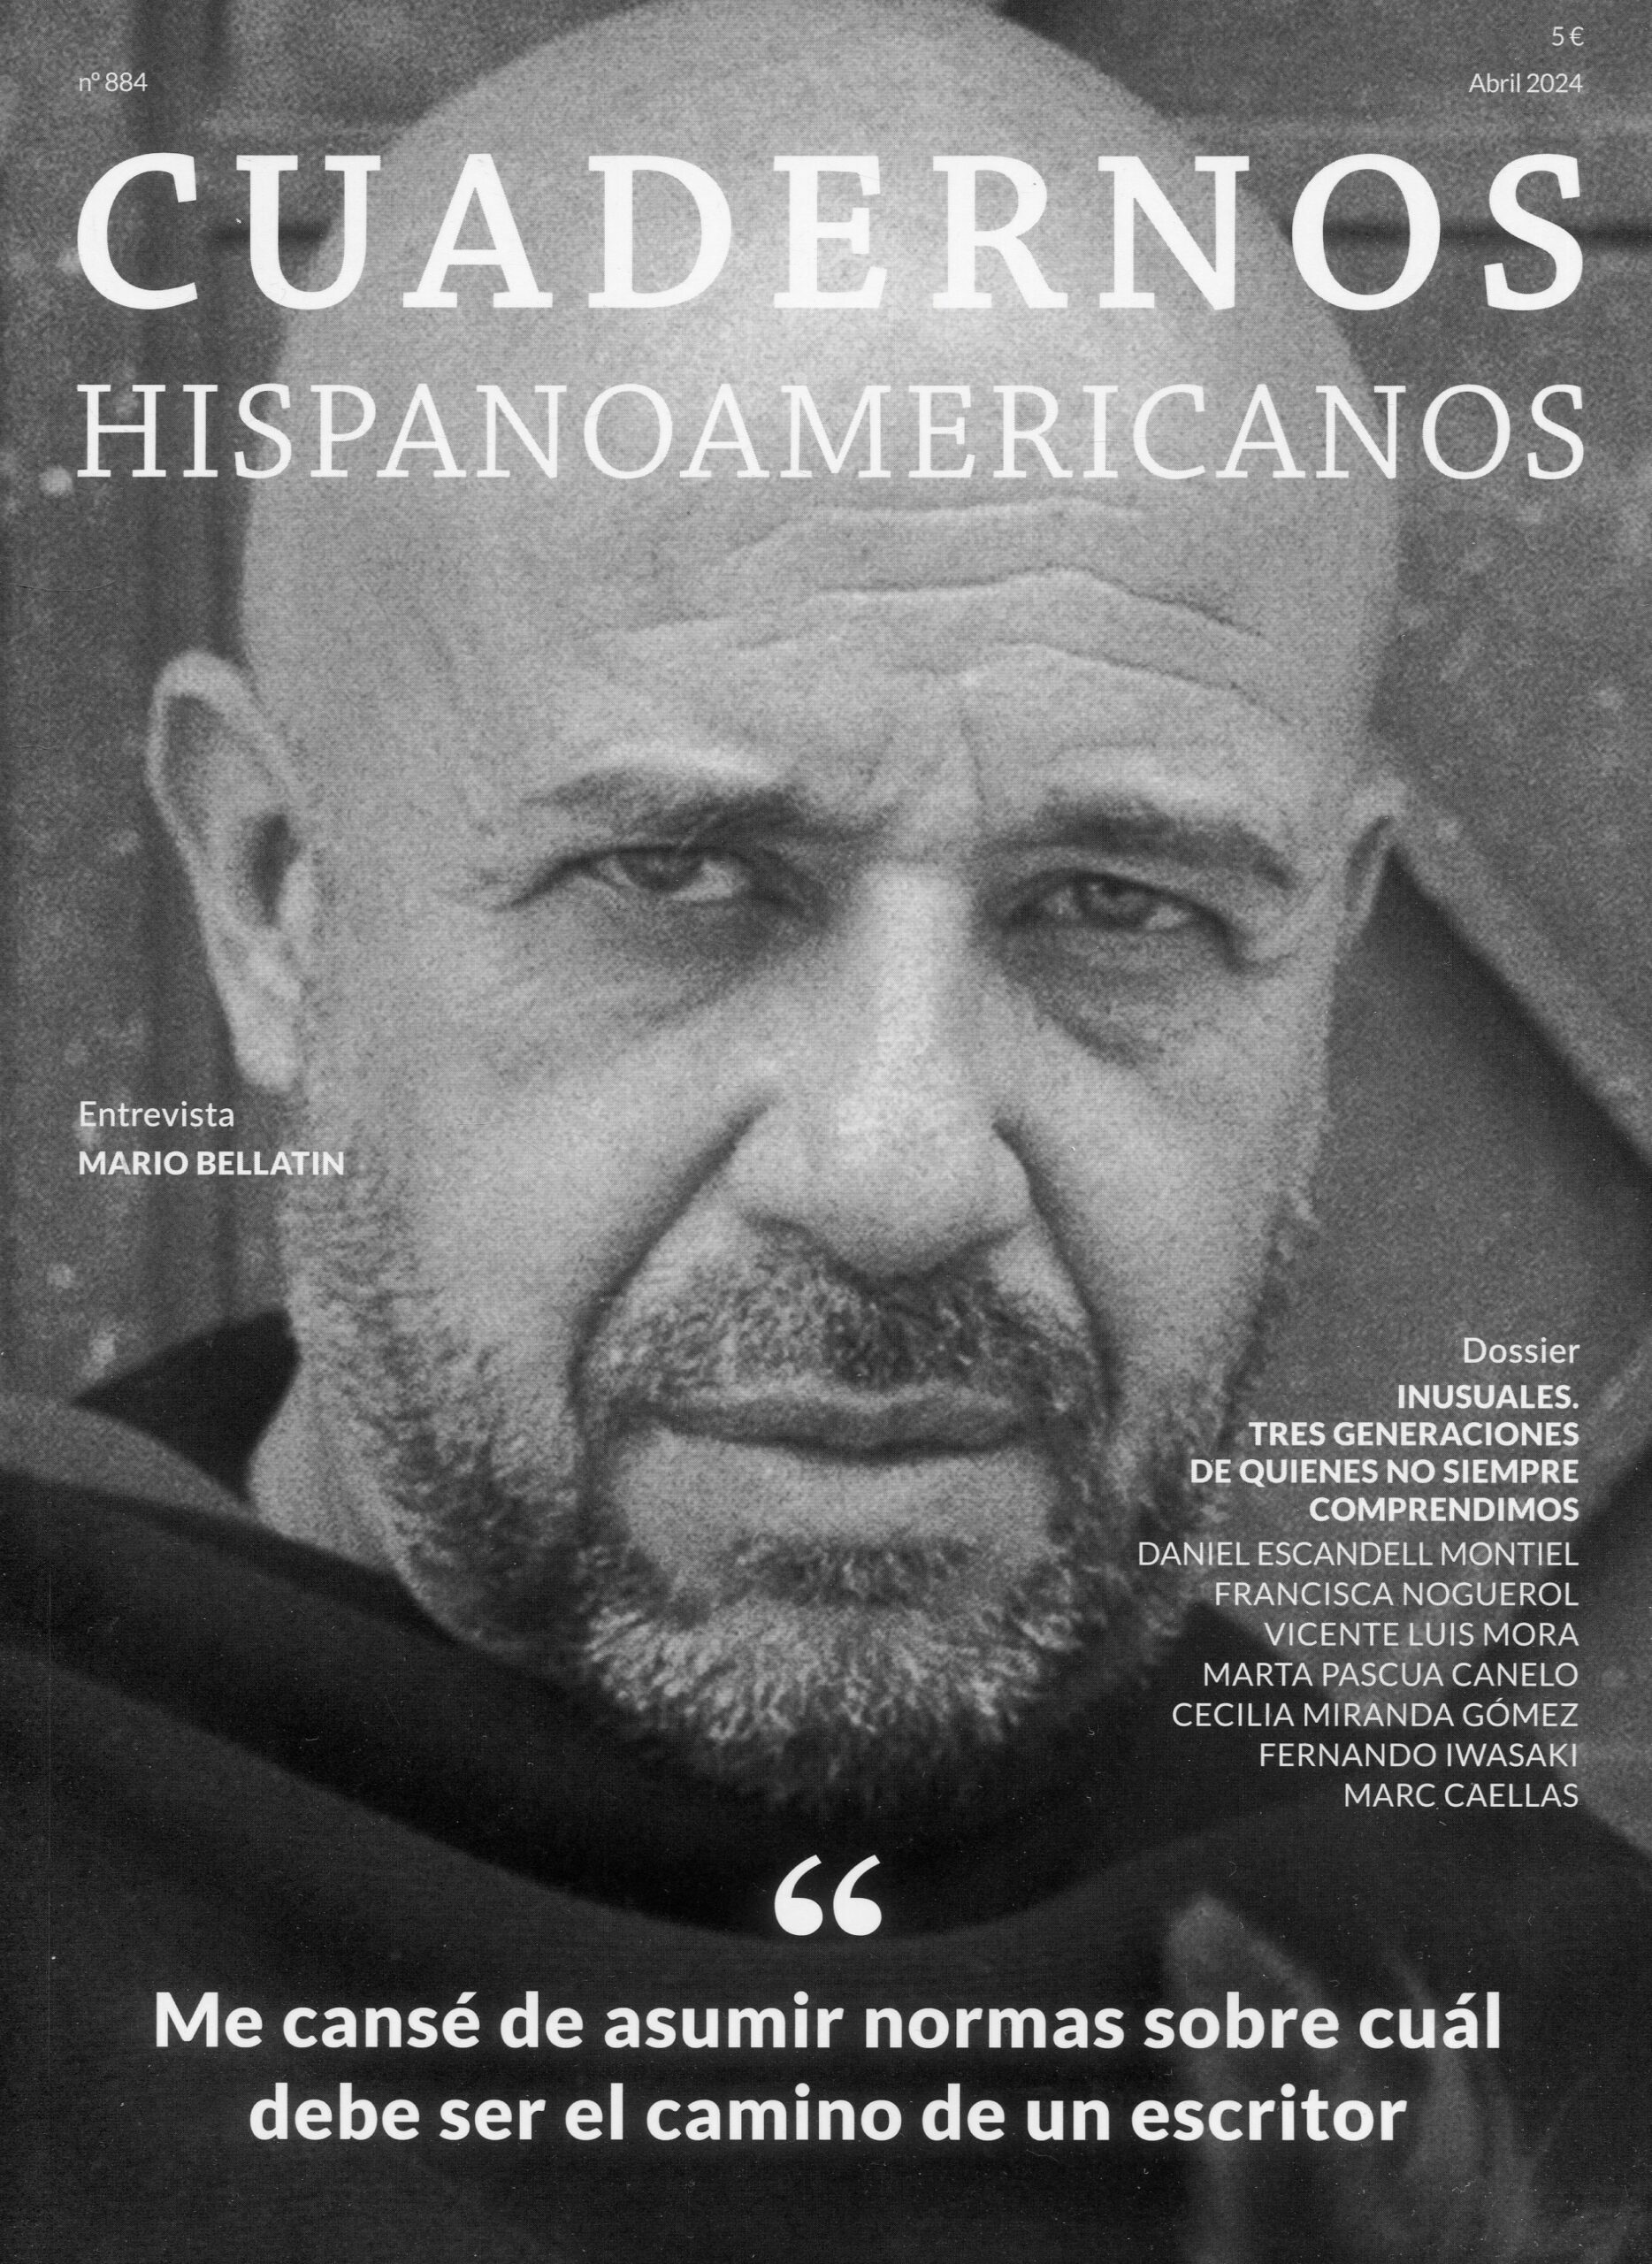 Cuadernos Hispanoamericanos Nº 884